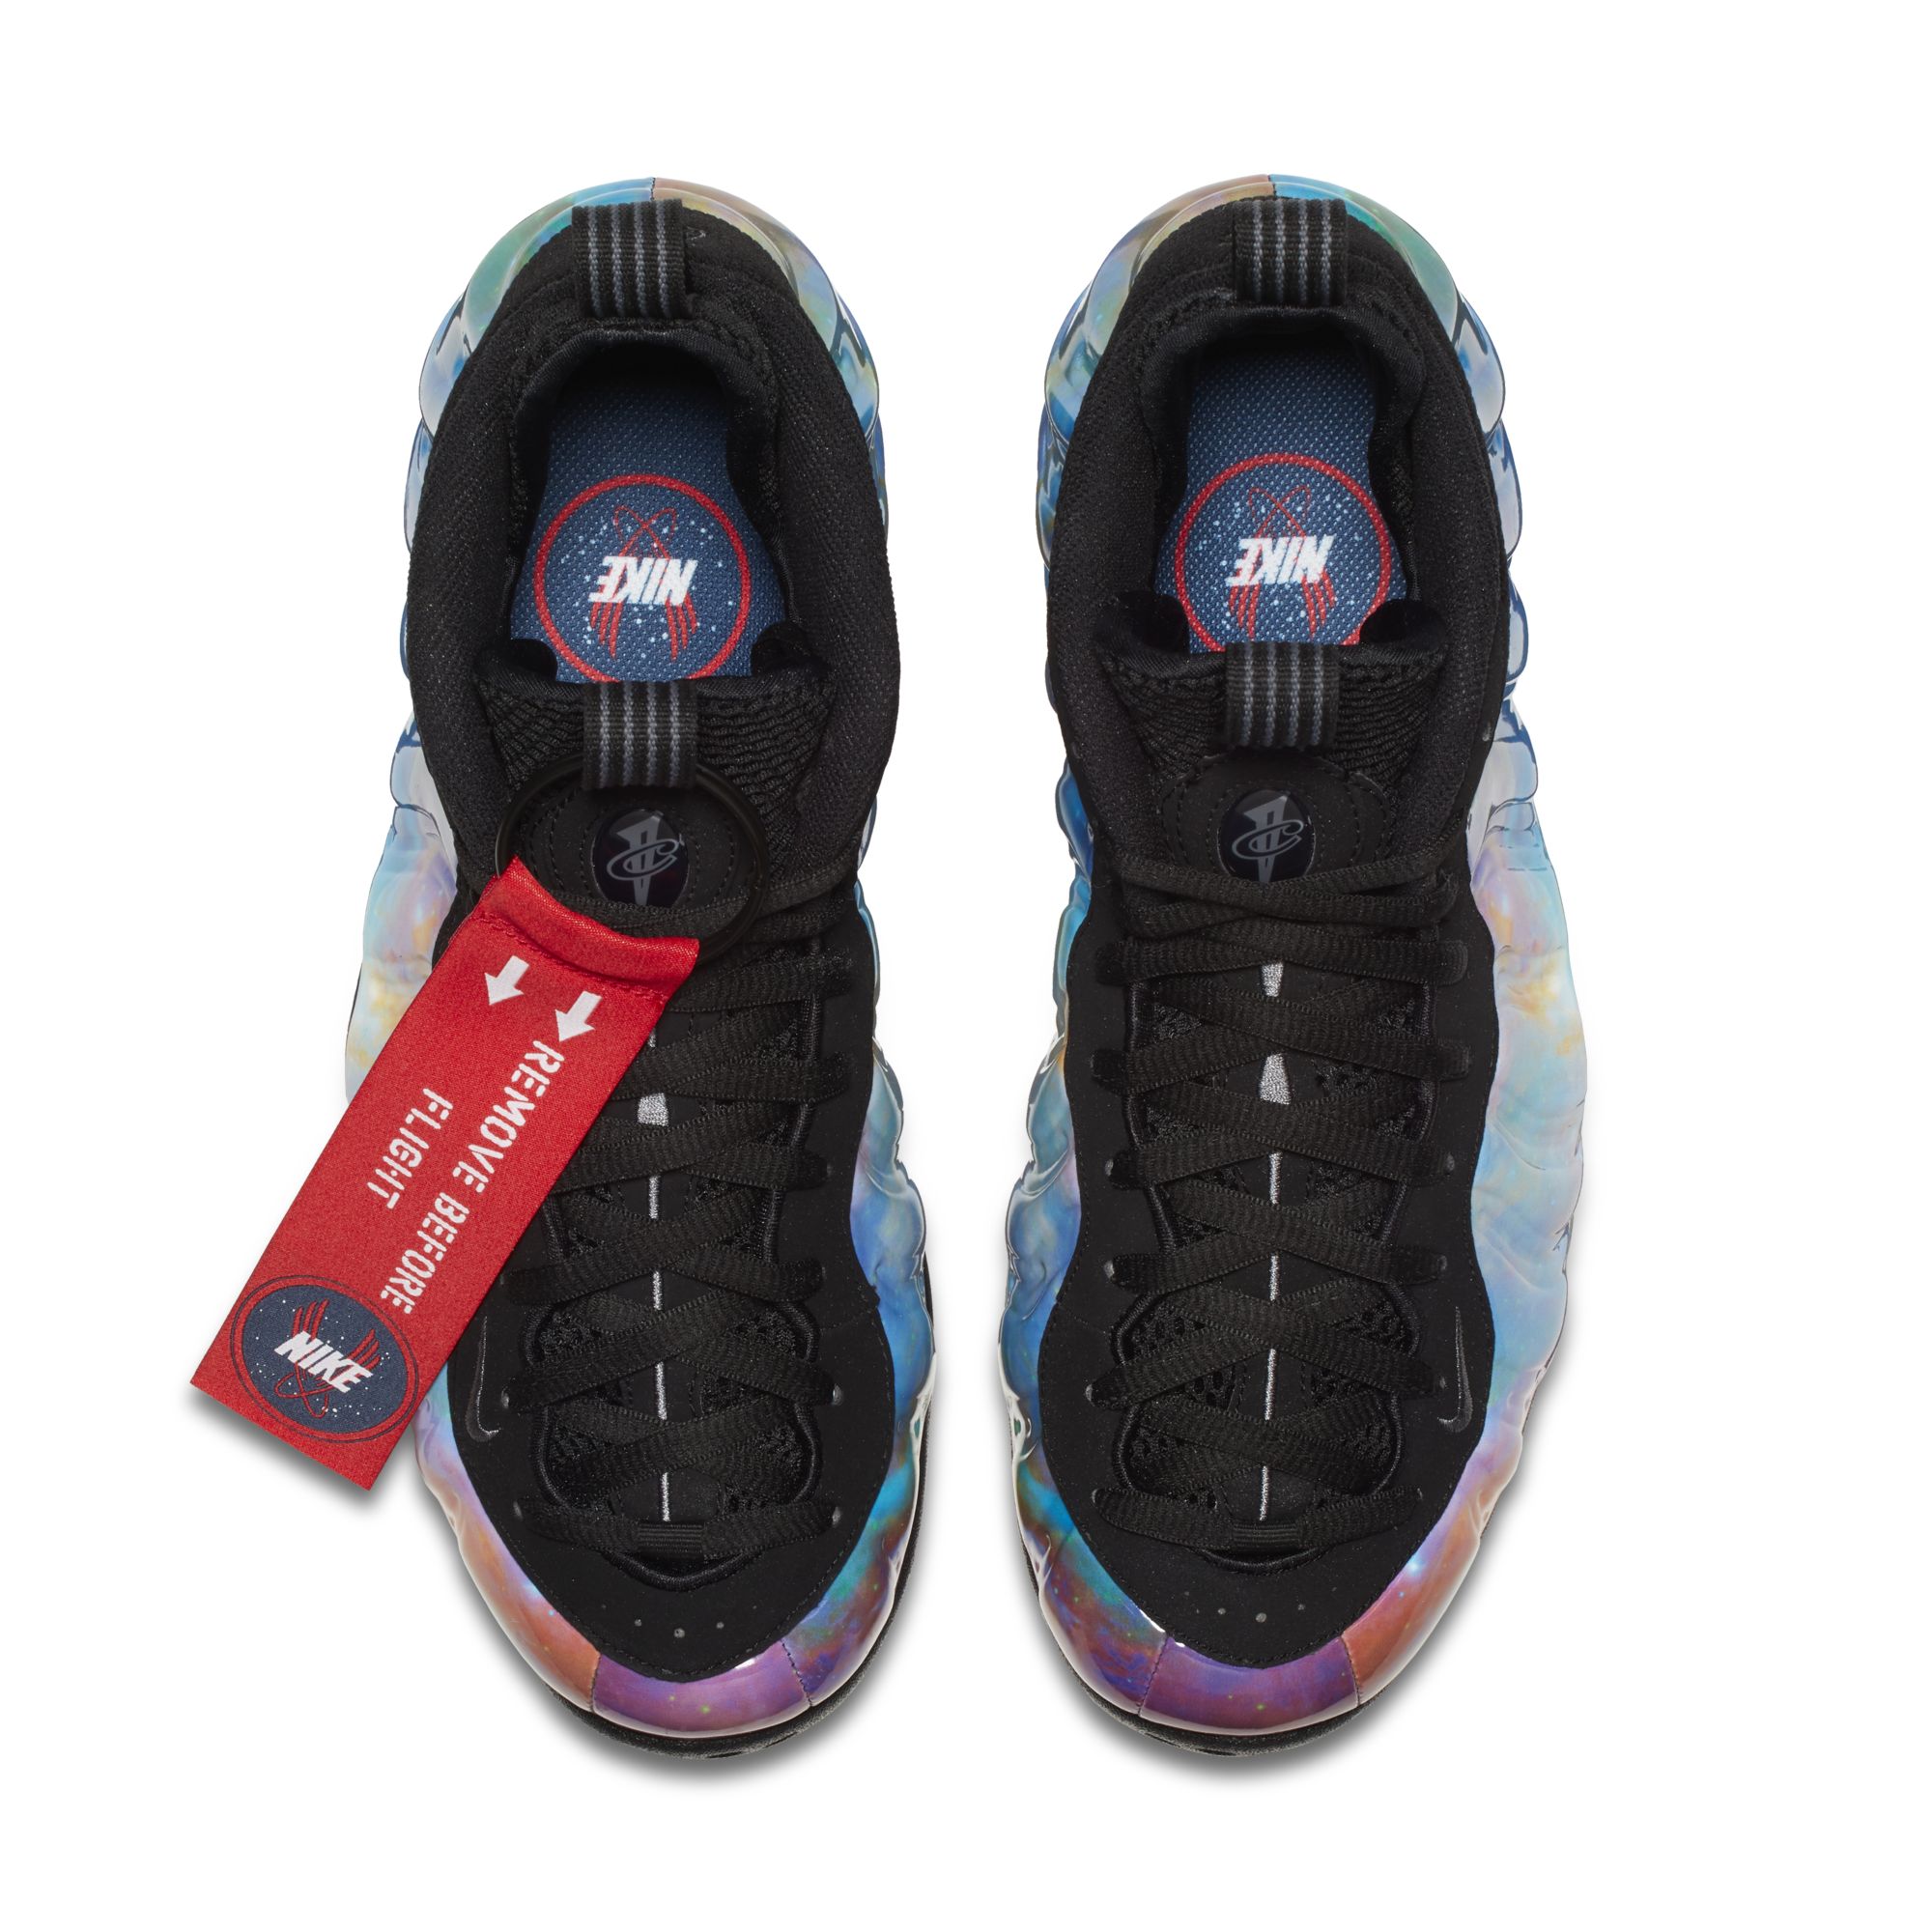 Nike Air Foamposite One XX QS nebula alternate galaxy 1